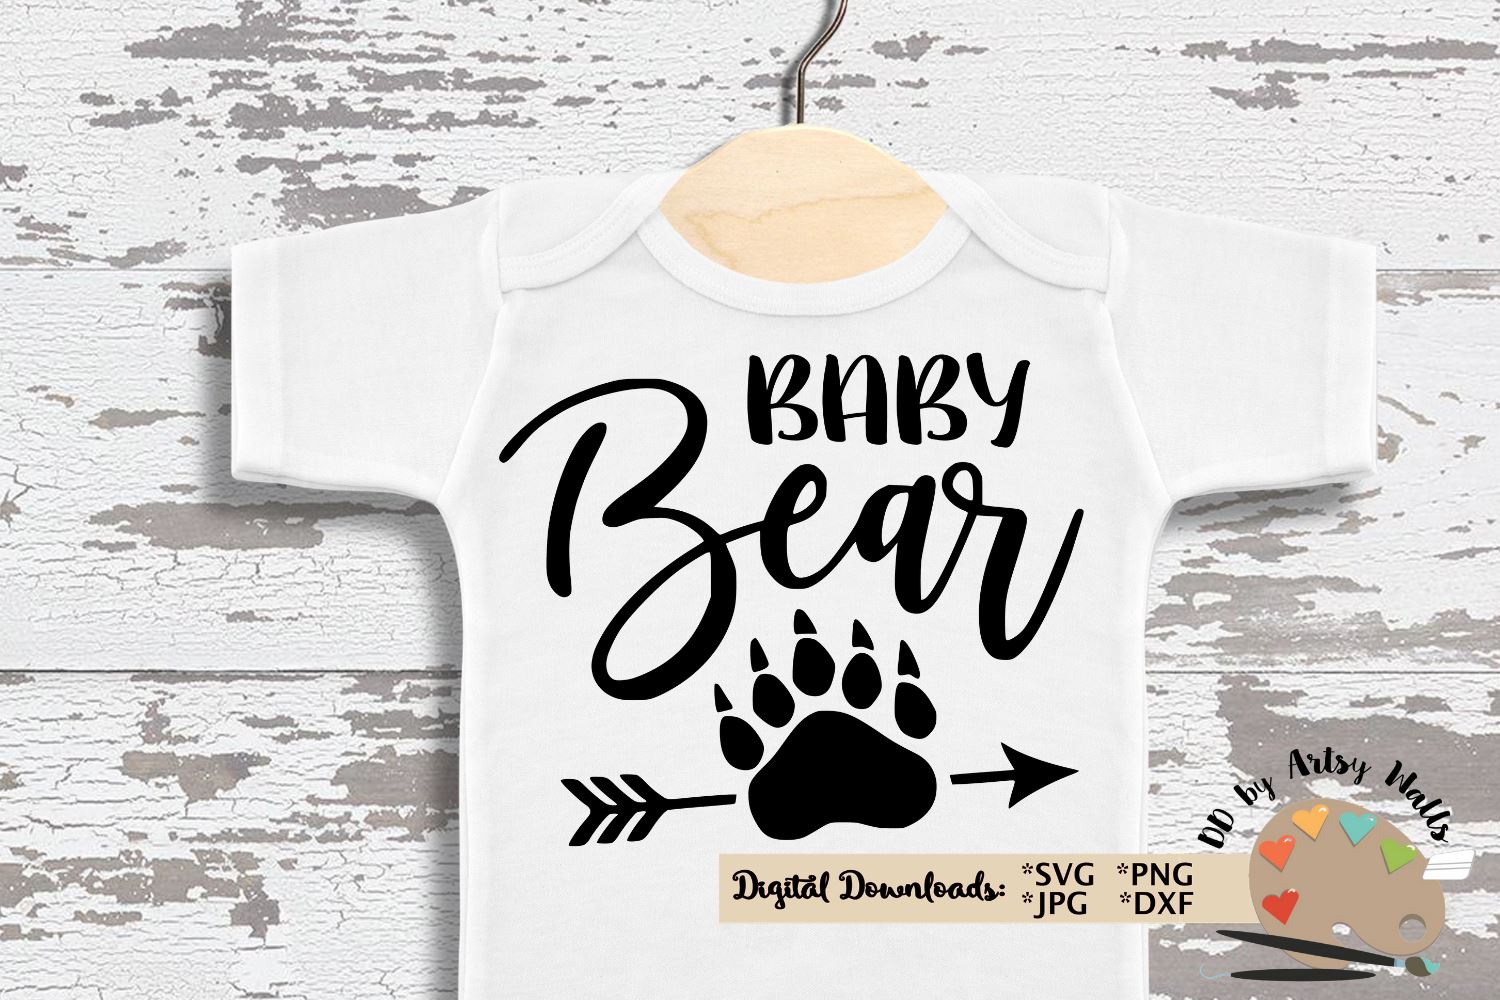 Baby Bear Svg Dxf New Baby Gift Baby Onesie Diy Baby Shower Gift So Fontsy